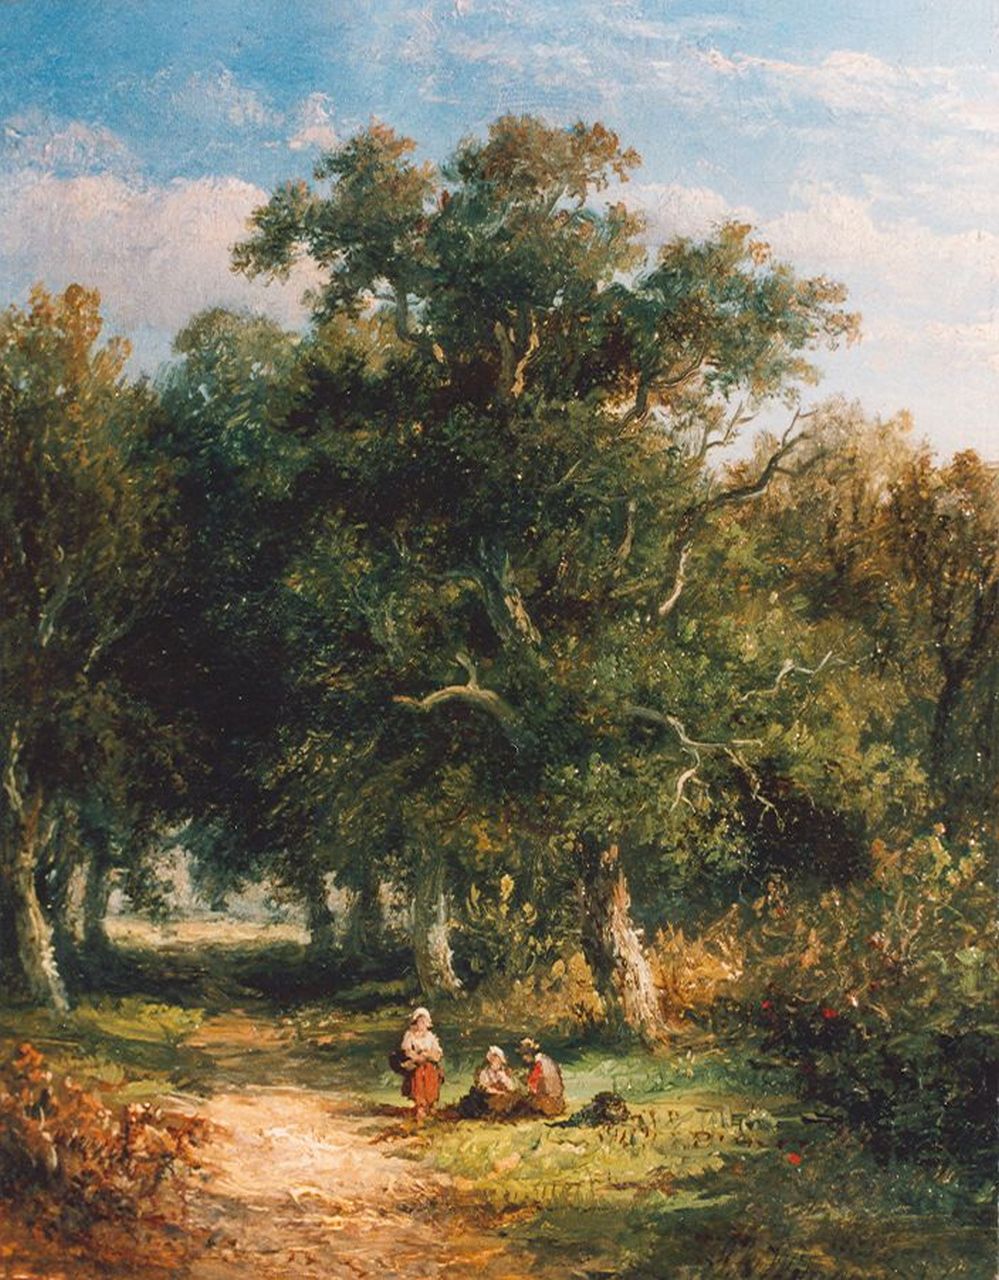 Wijngaerdt A.J. van | Anthonie Jacobus van Wijngaerdt, Travellers in a wooded landscape, oil on panel 14.8 x 11.8 cm, signed l.r. and dated 1854